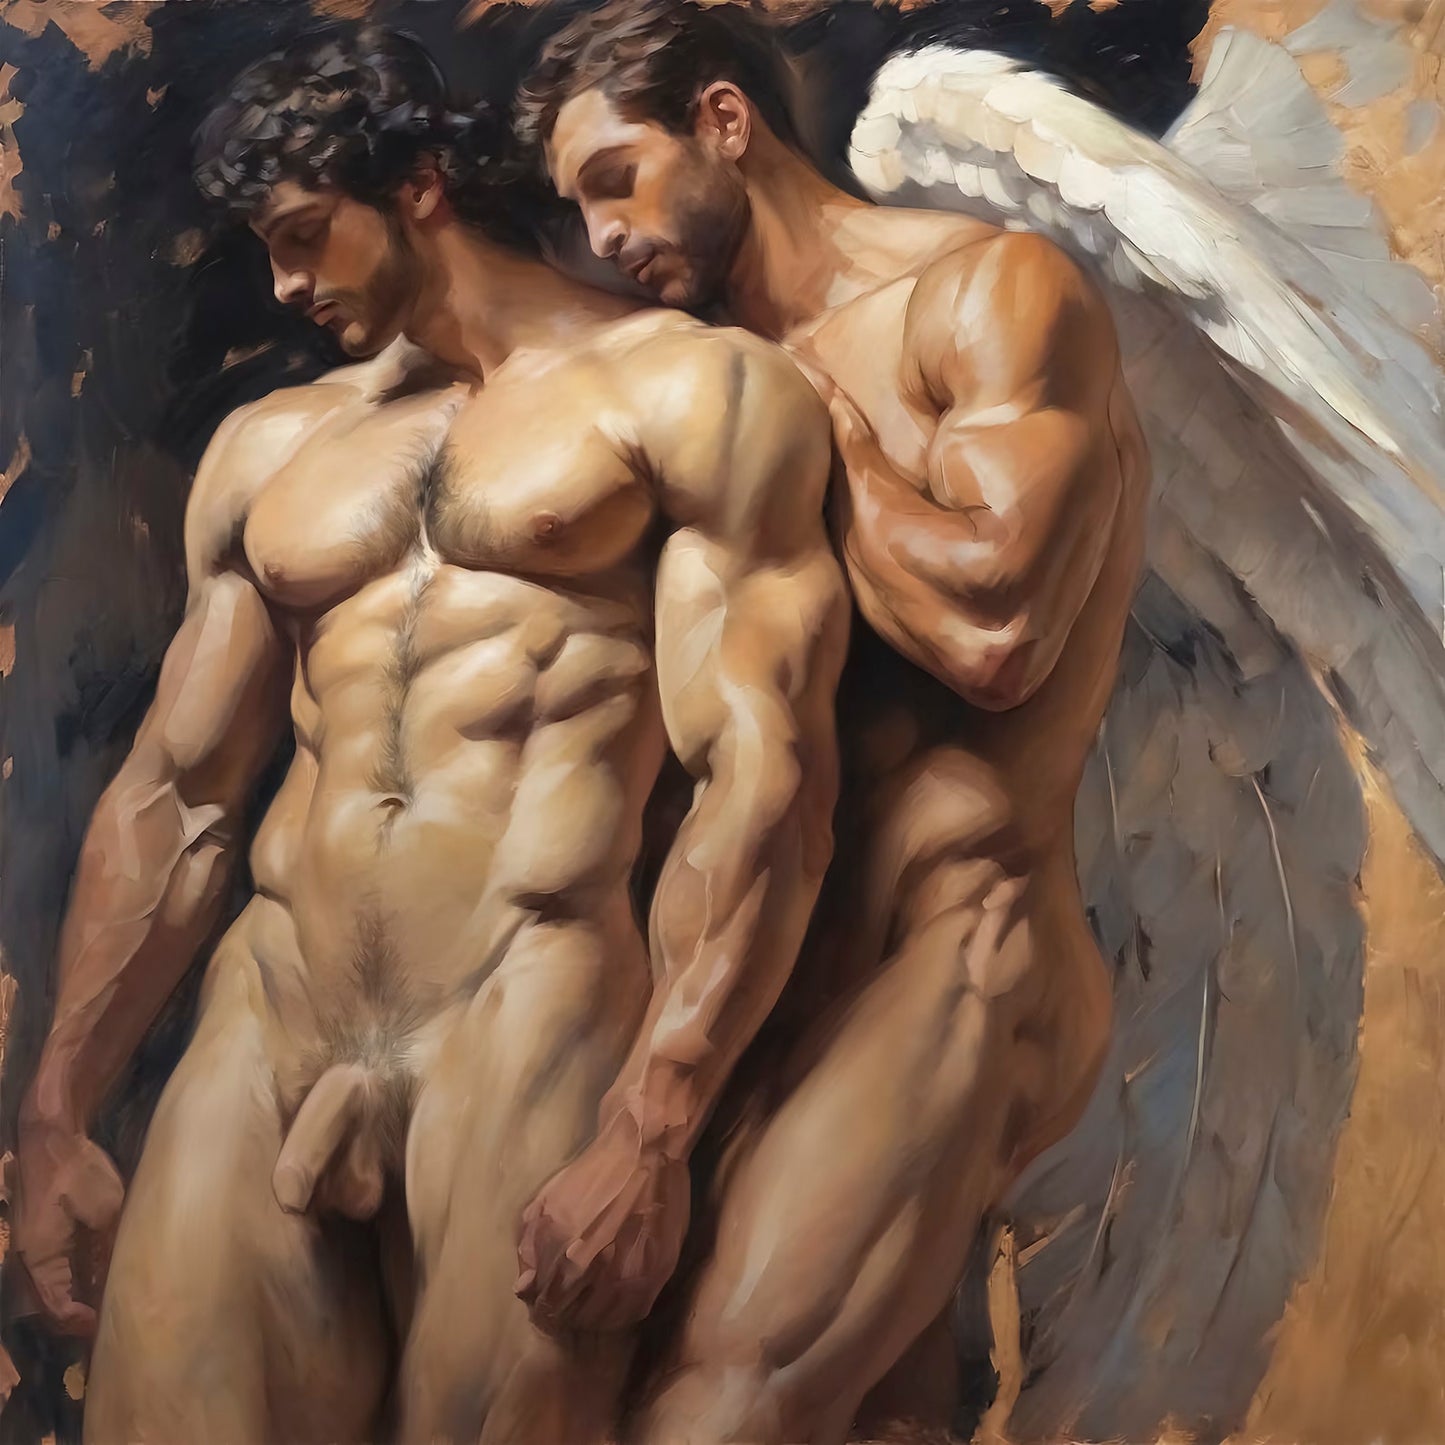 Muscle Male Couple Hugging Nude Figures, Angel Wings, Gay Art Download